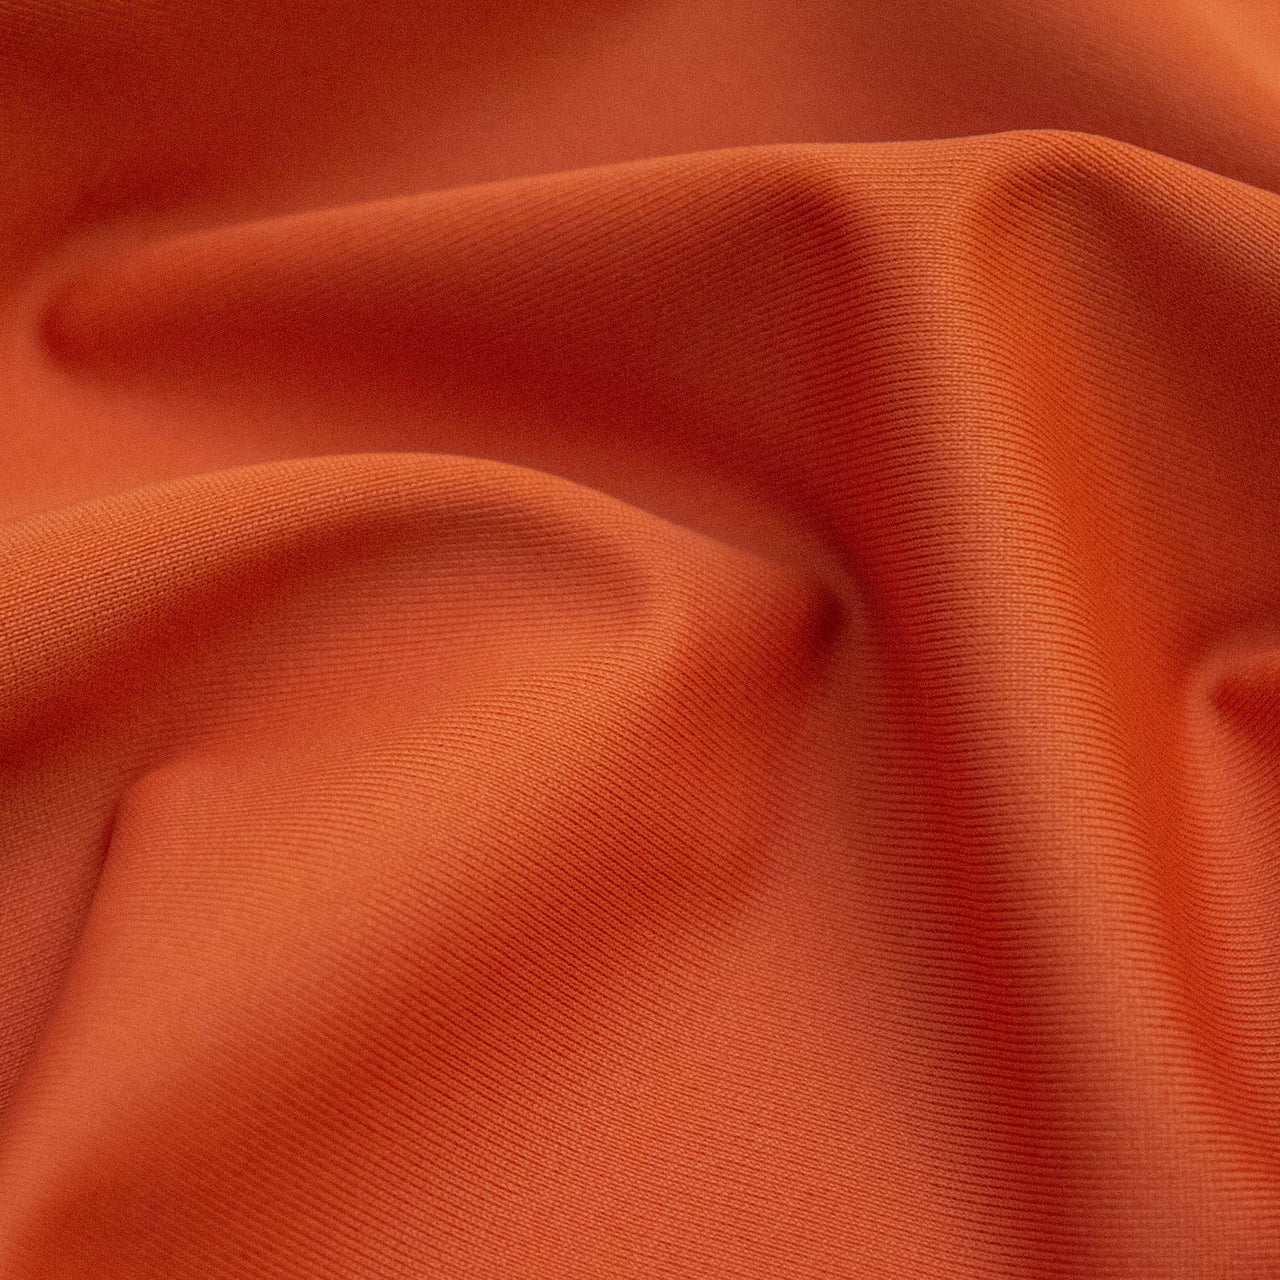 Morocco - Vita by Carvico Econyl All way Stretch Recycled Nylon Spandex Fabric